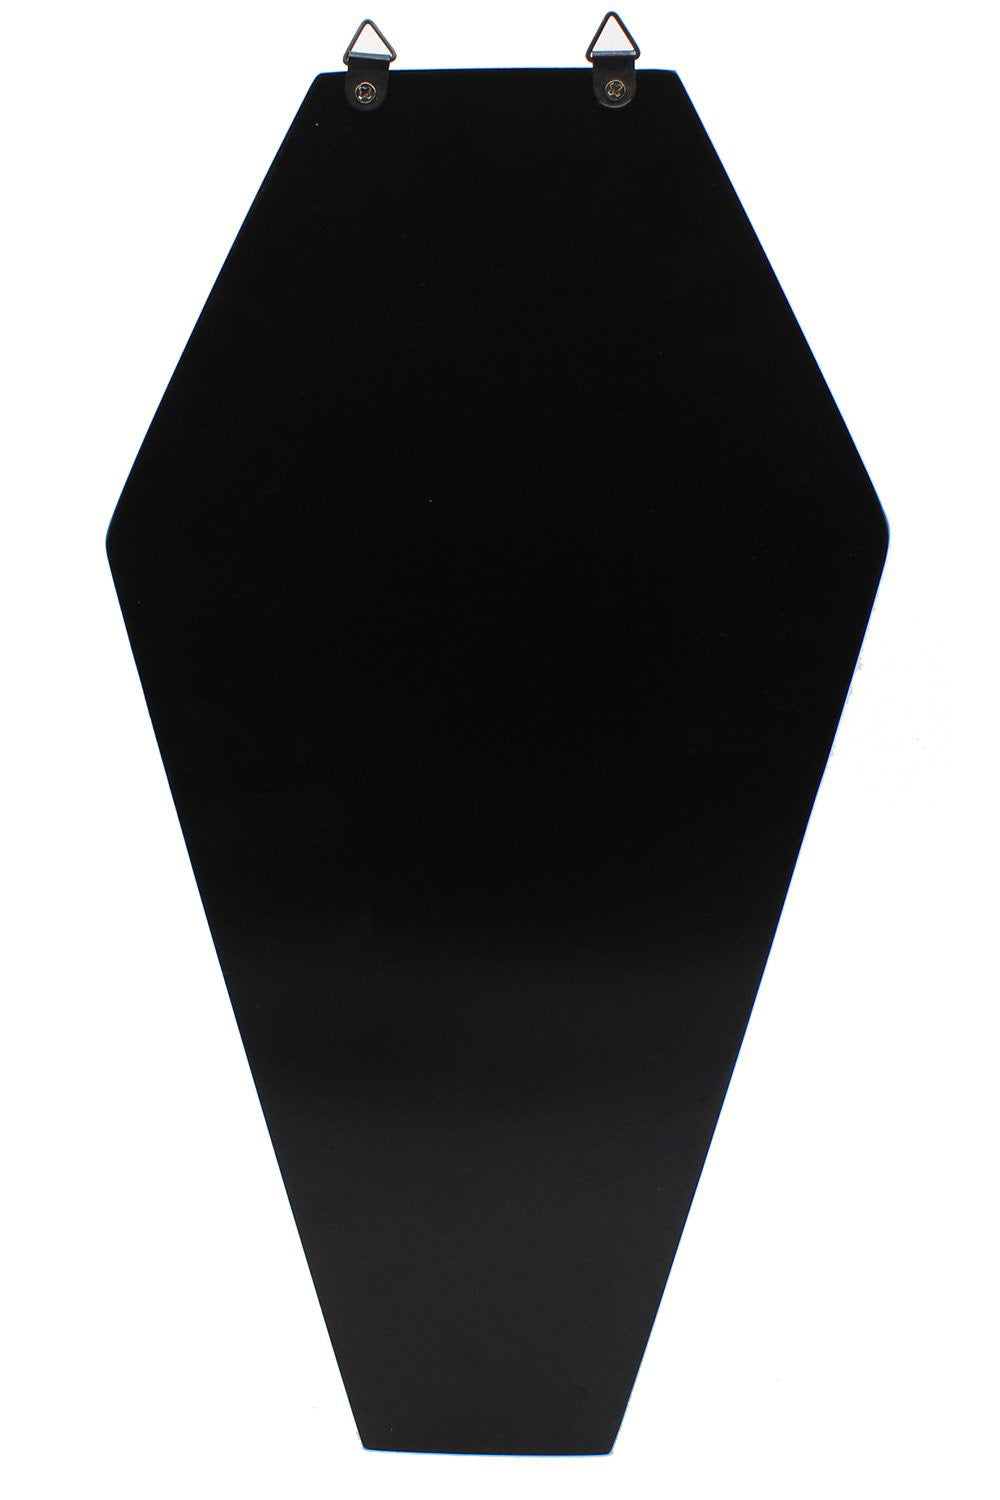 Gothic Coffin Shelf [Black]